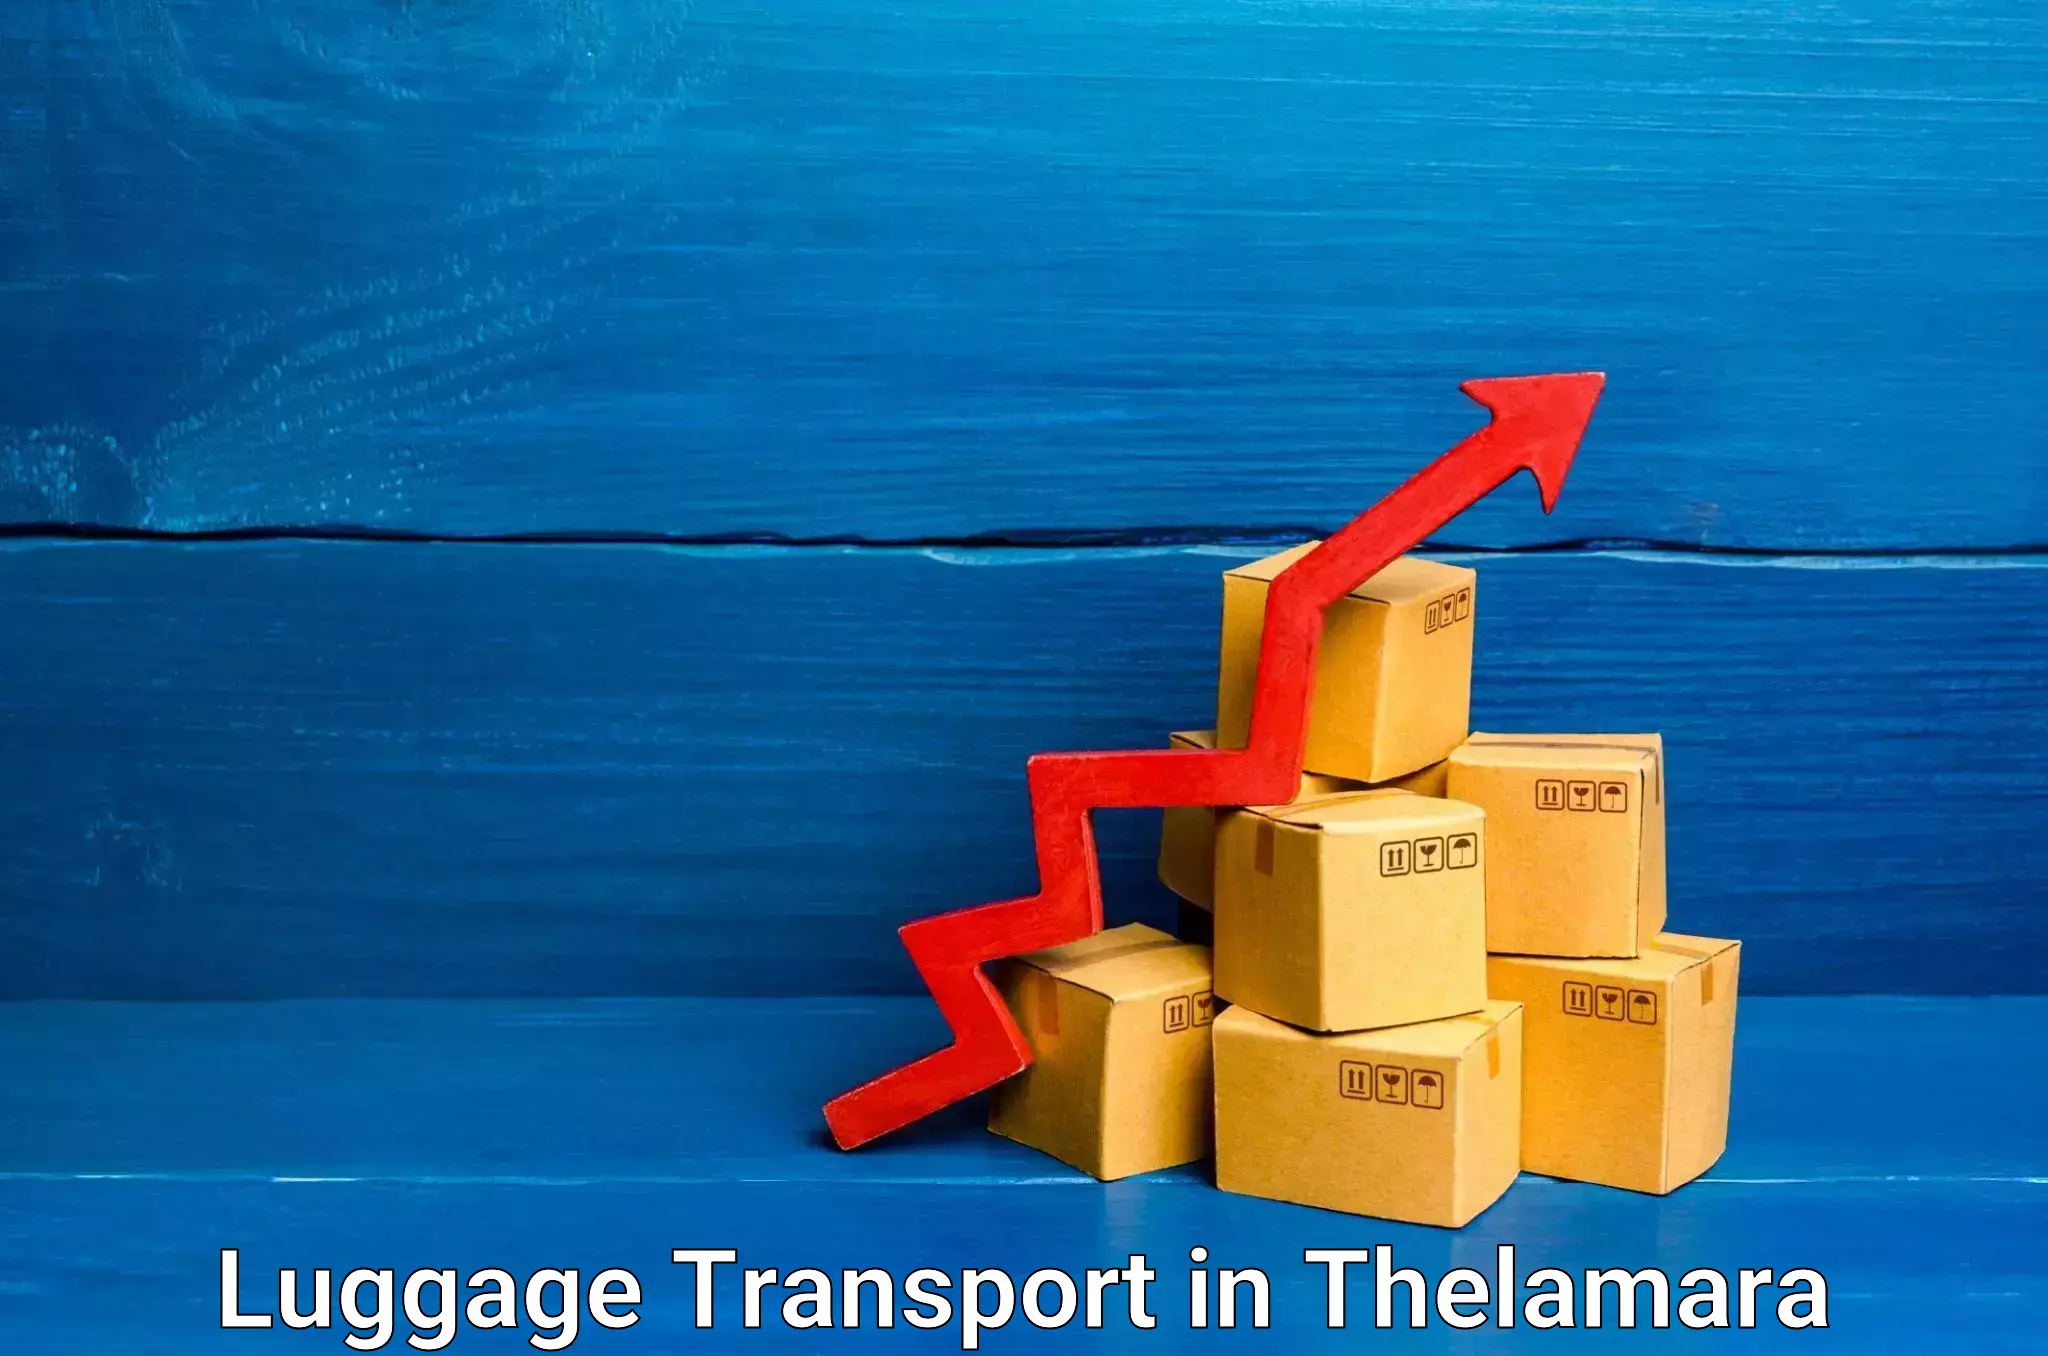 Baggage shipping service in Thelamara